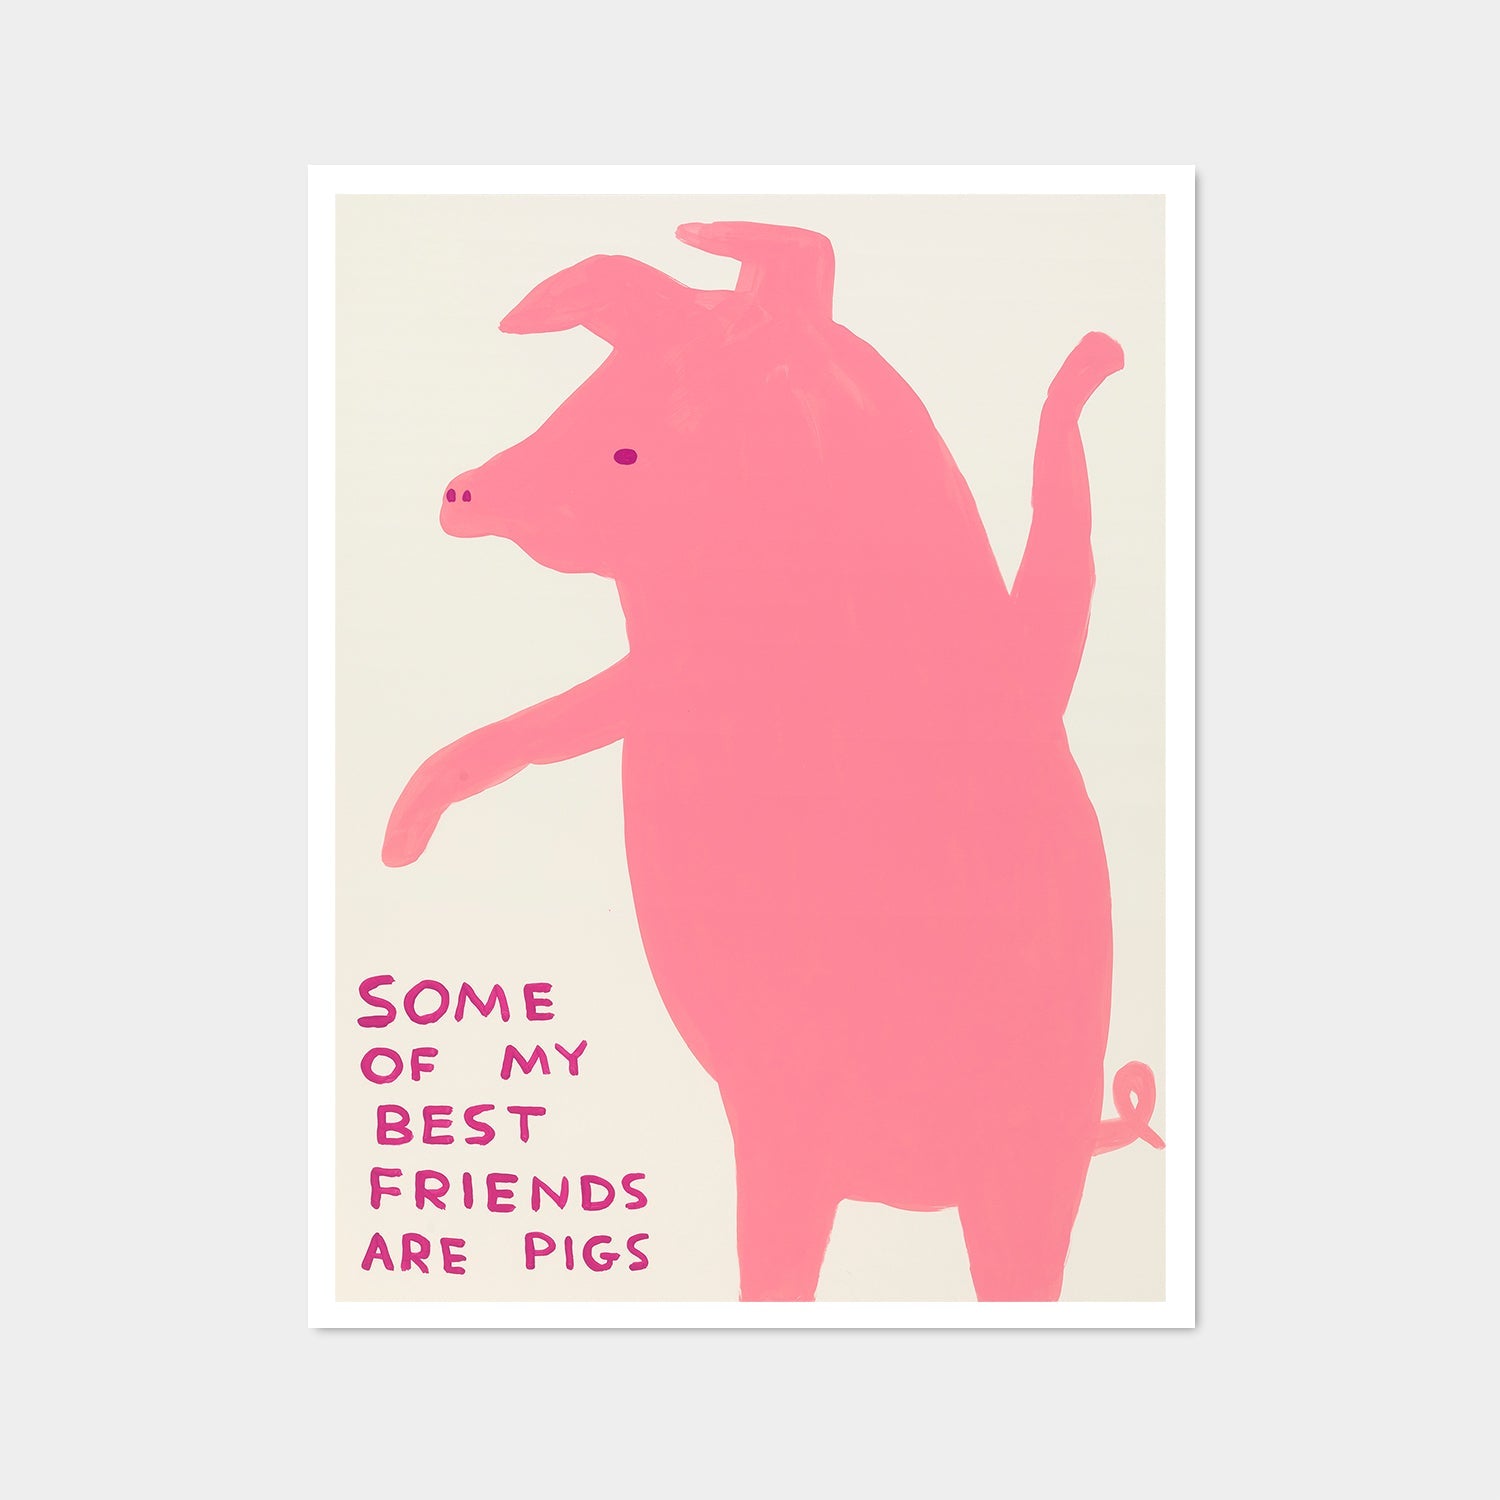 David Shrigley print featuring a pig standing up